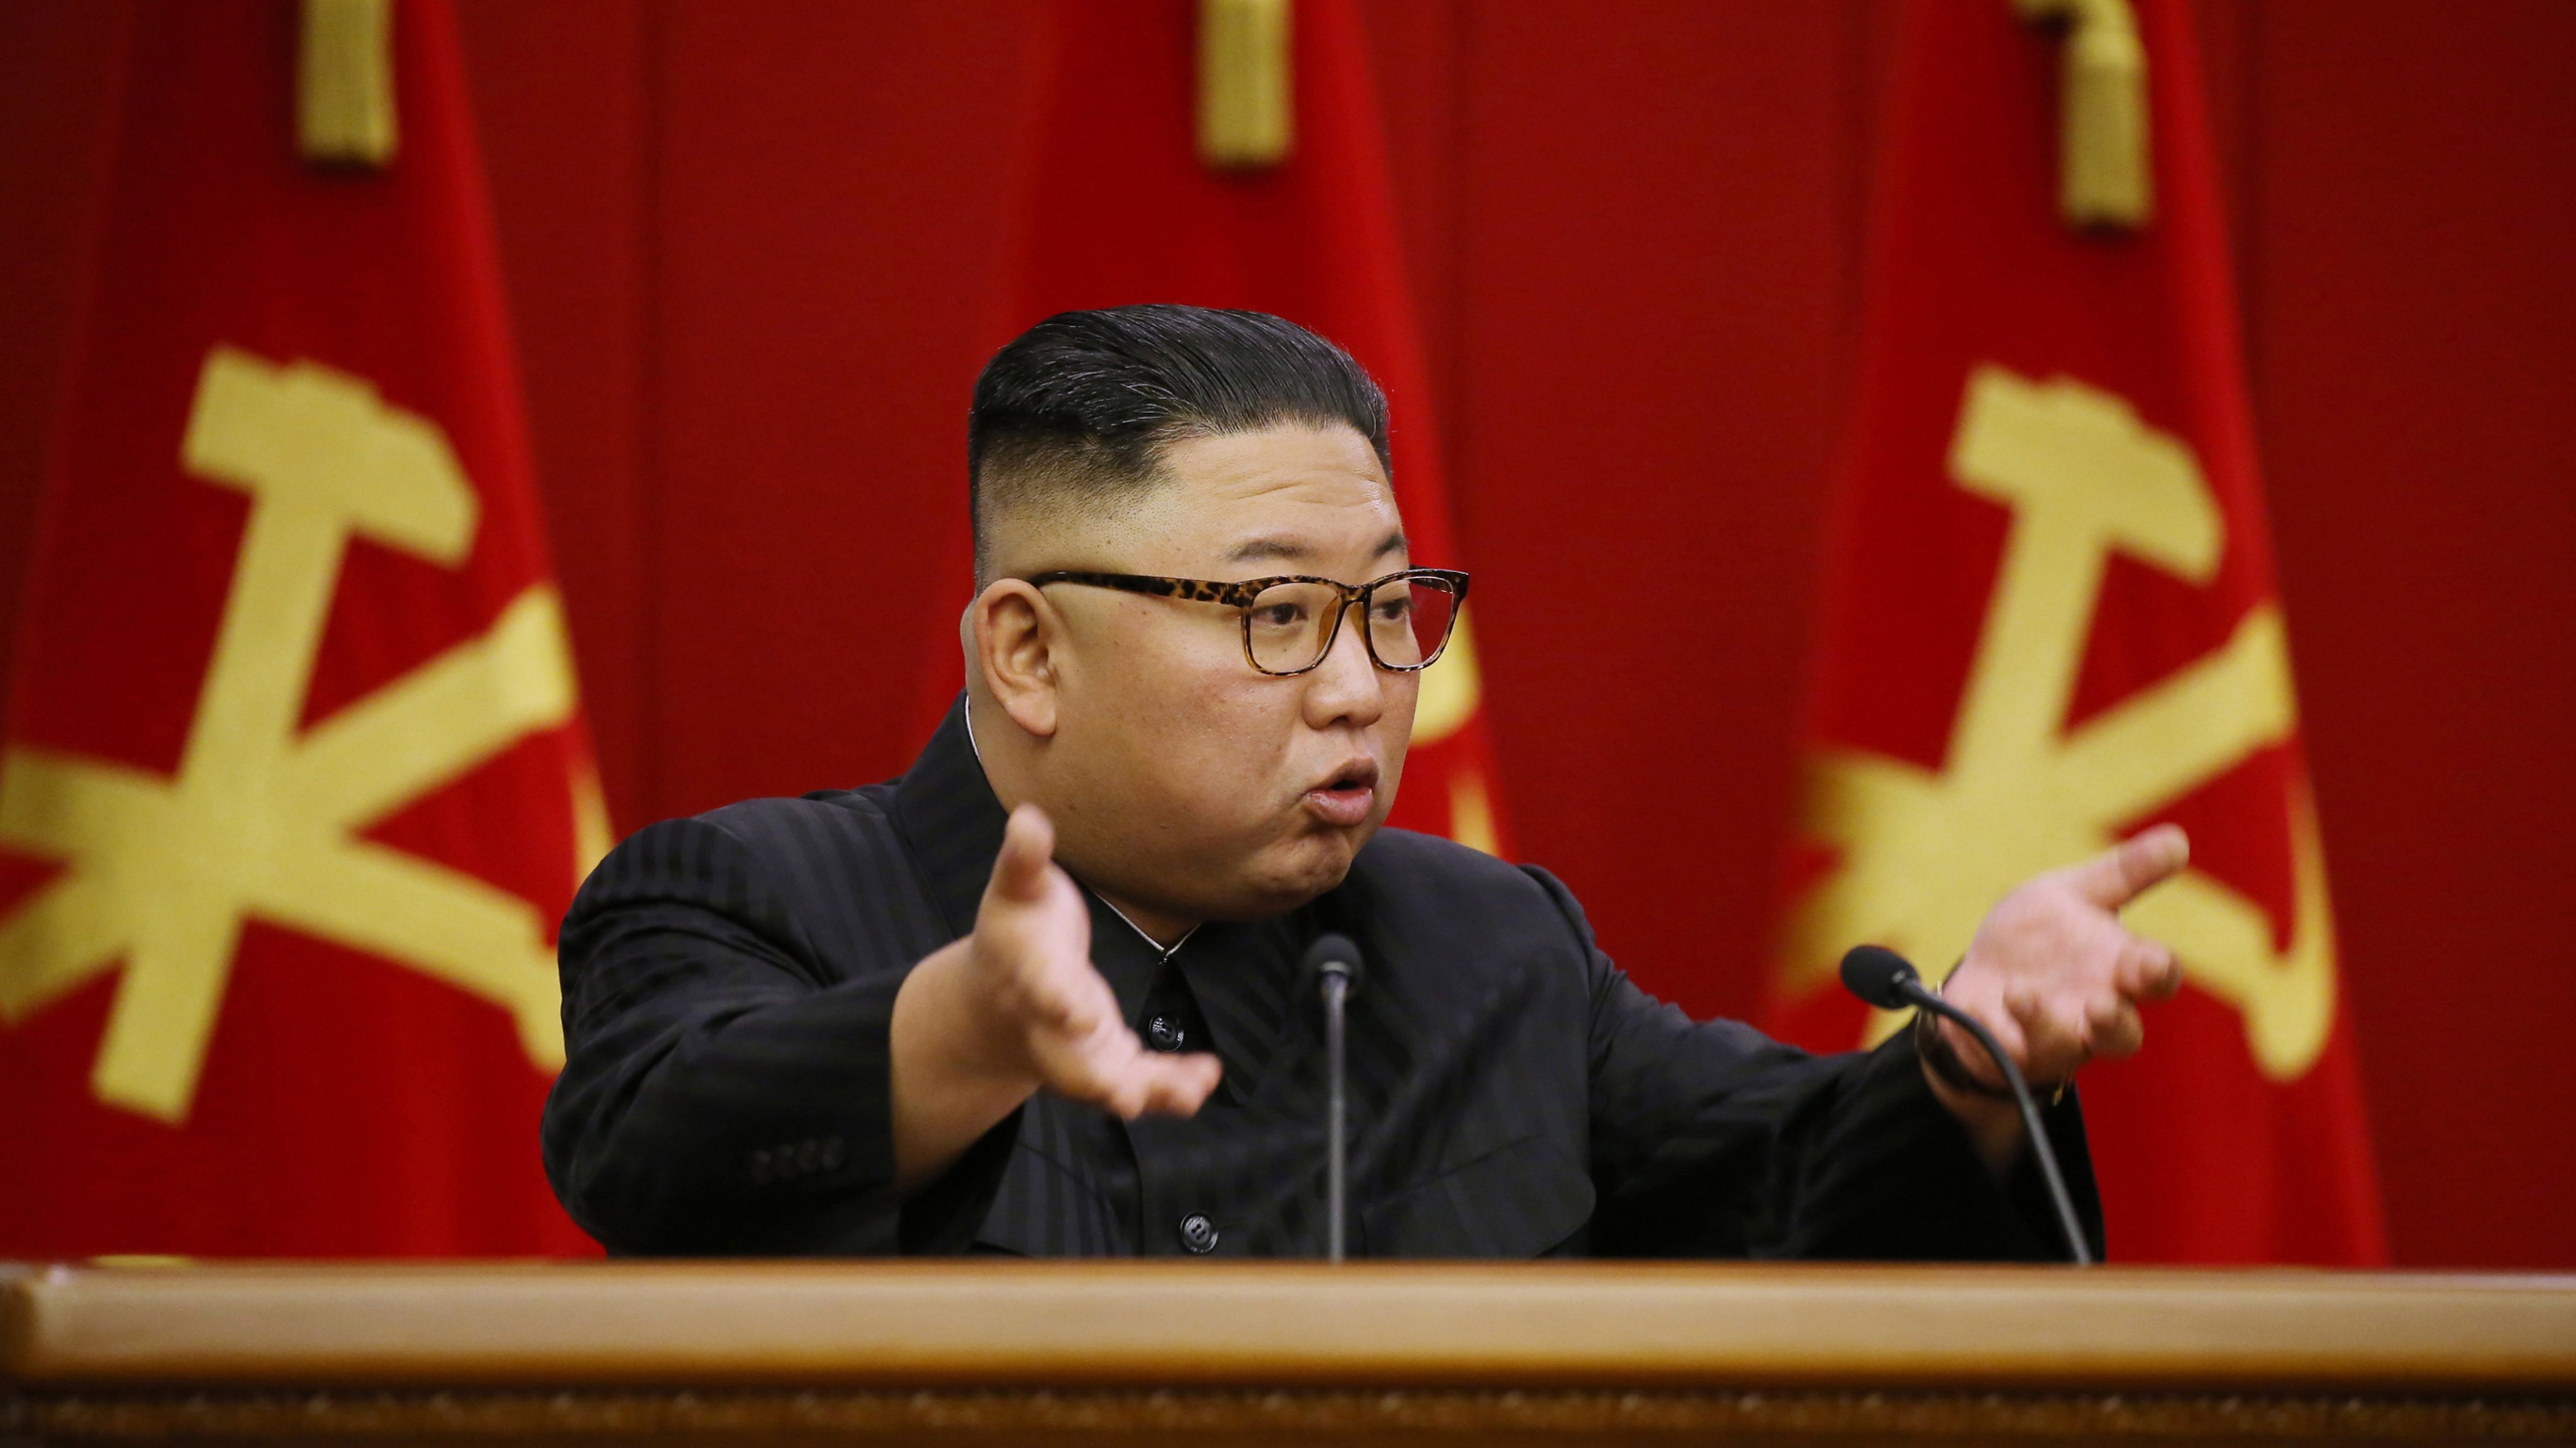 O regime de Kim Jong-Un tem estado a intensificar os testes com mísseis balísticos